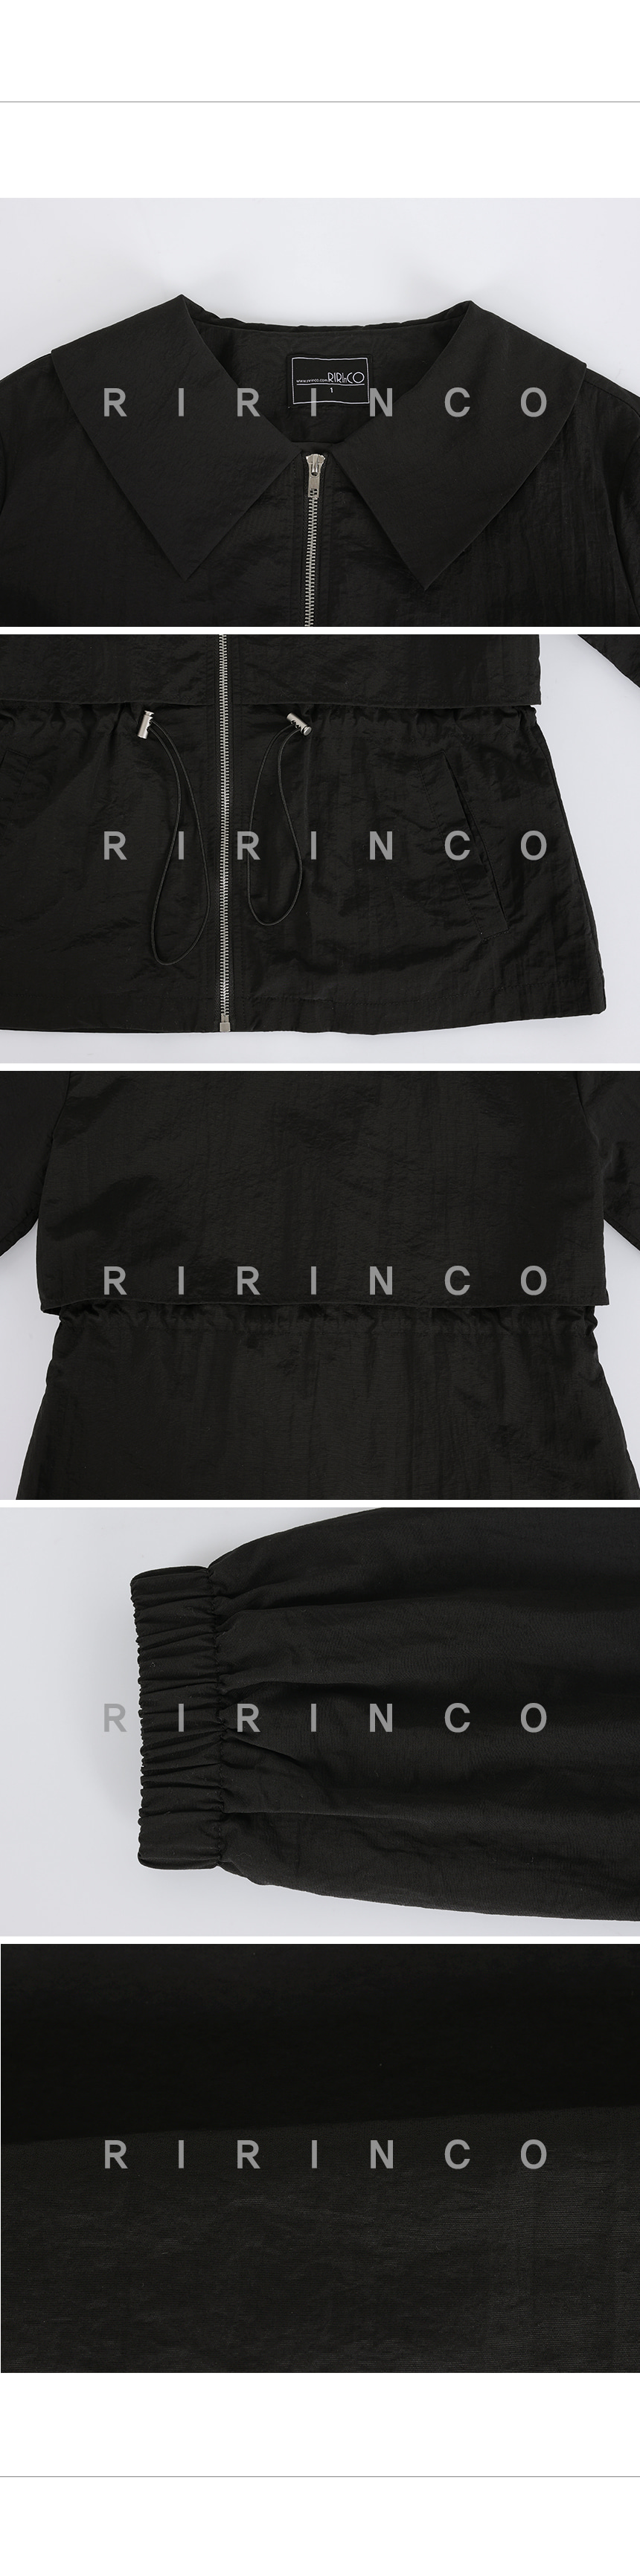 RIRINCO ビッグカラーストリングジャケット